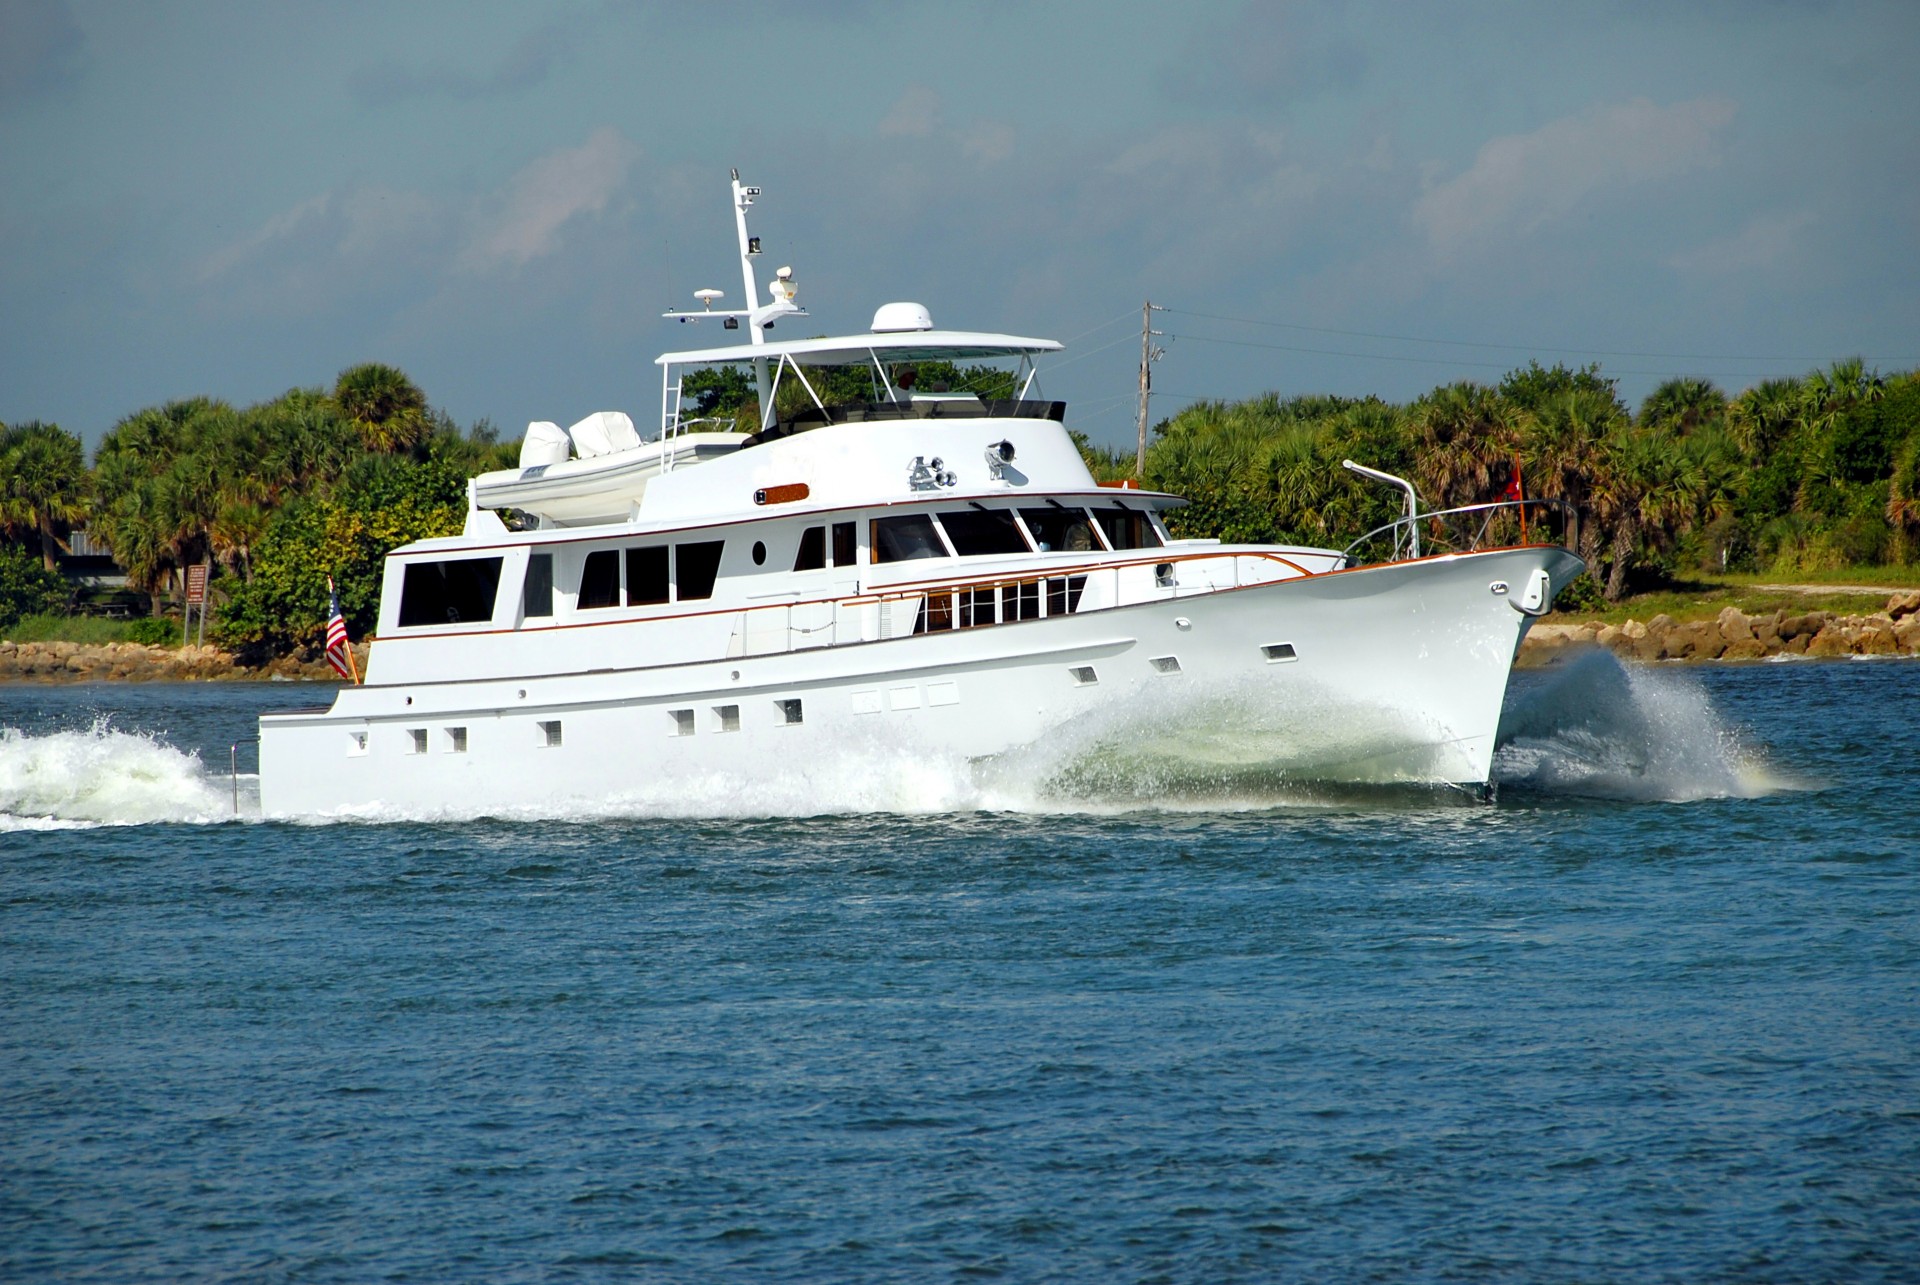 yacht cruising boat rental photos